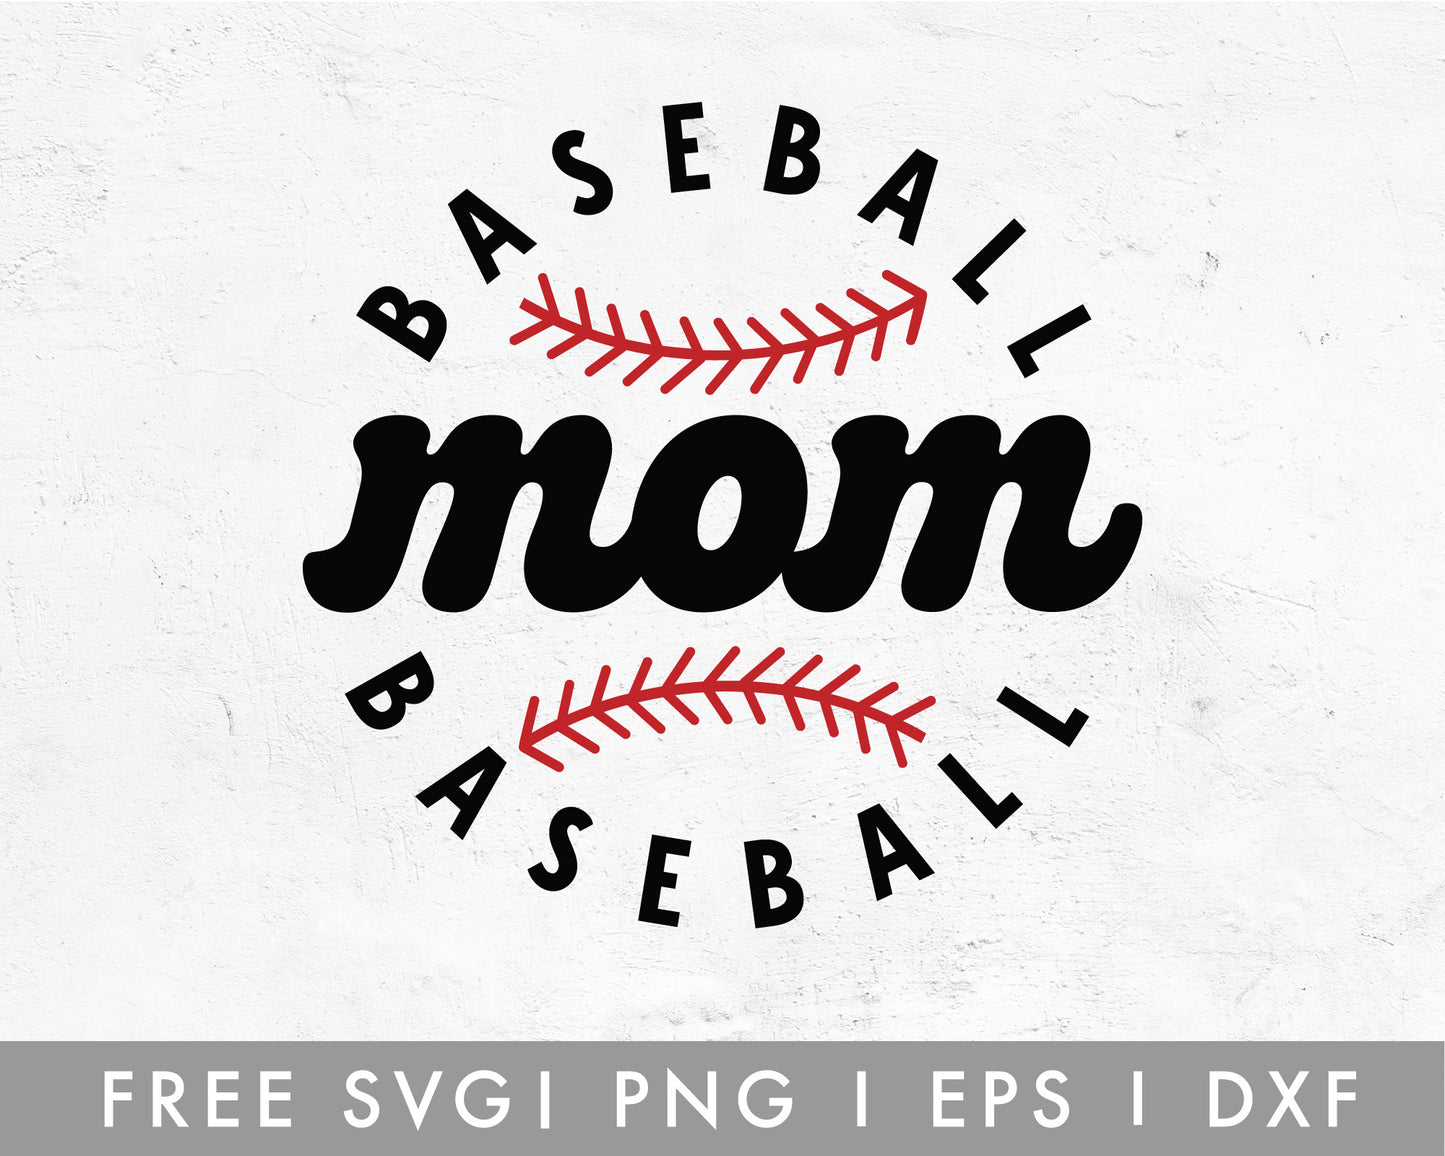 FREE Baseball Mom SVG | Mothers Day SVG